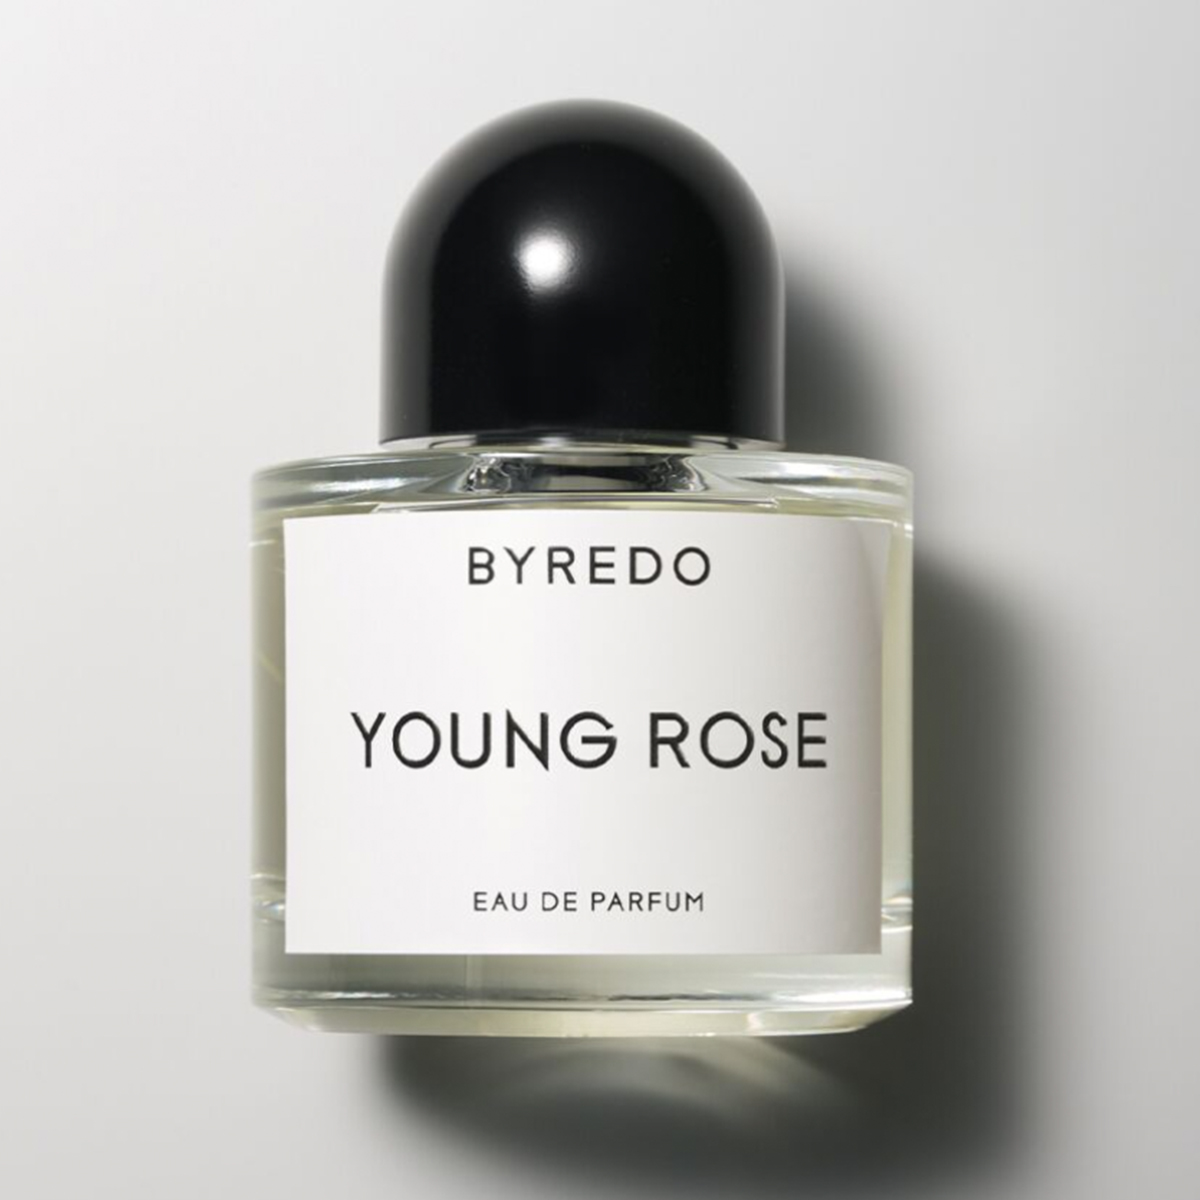 Byredo Young Rose Eau de Parfum